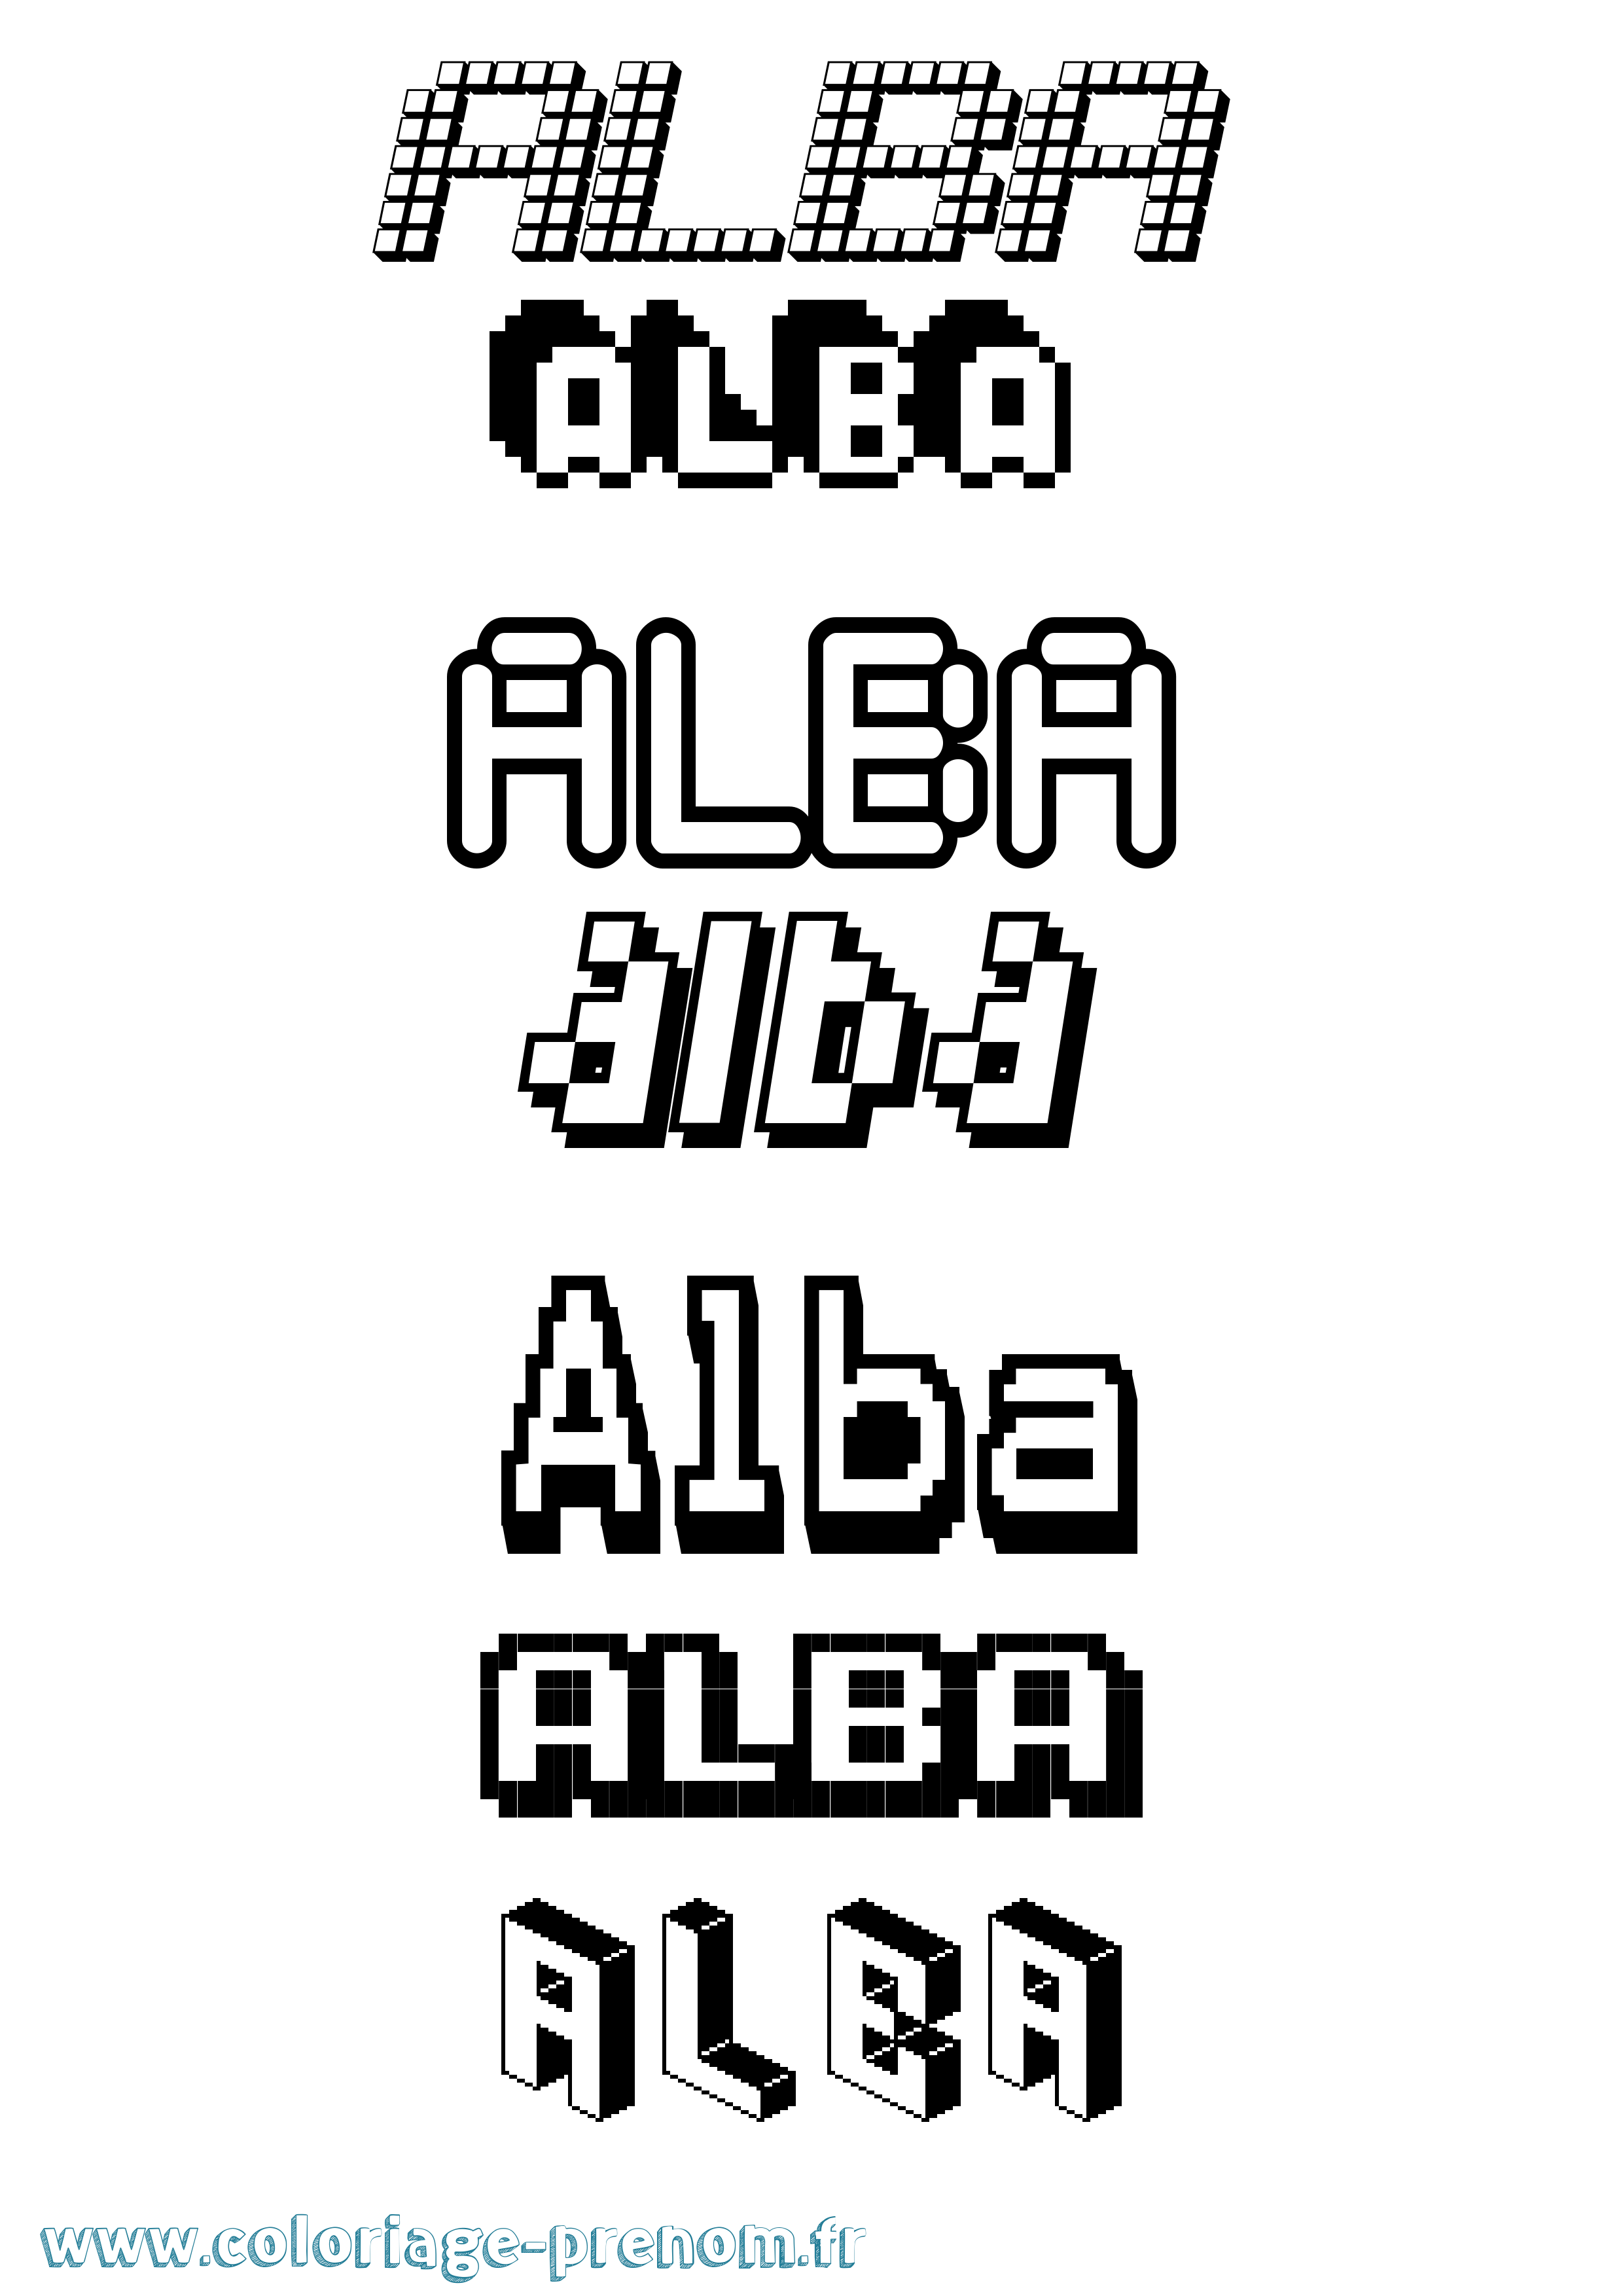 Coloriage prénom Alba